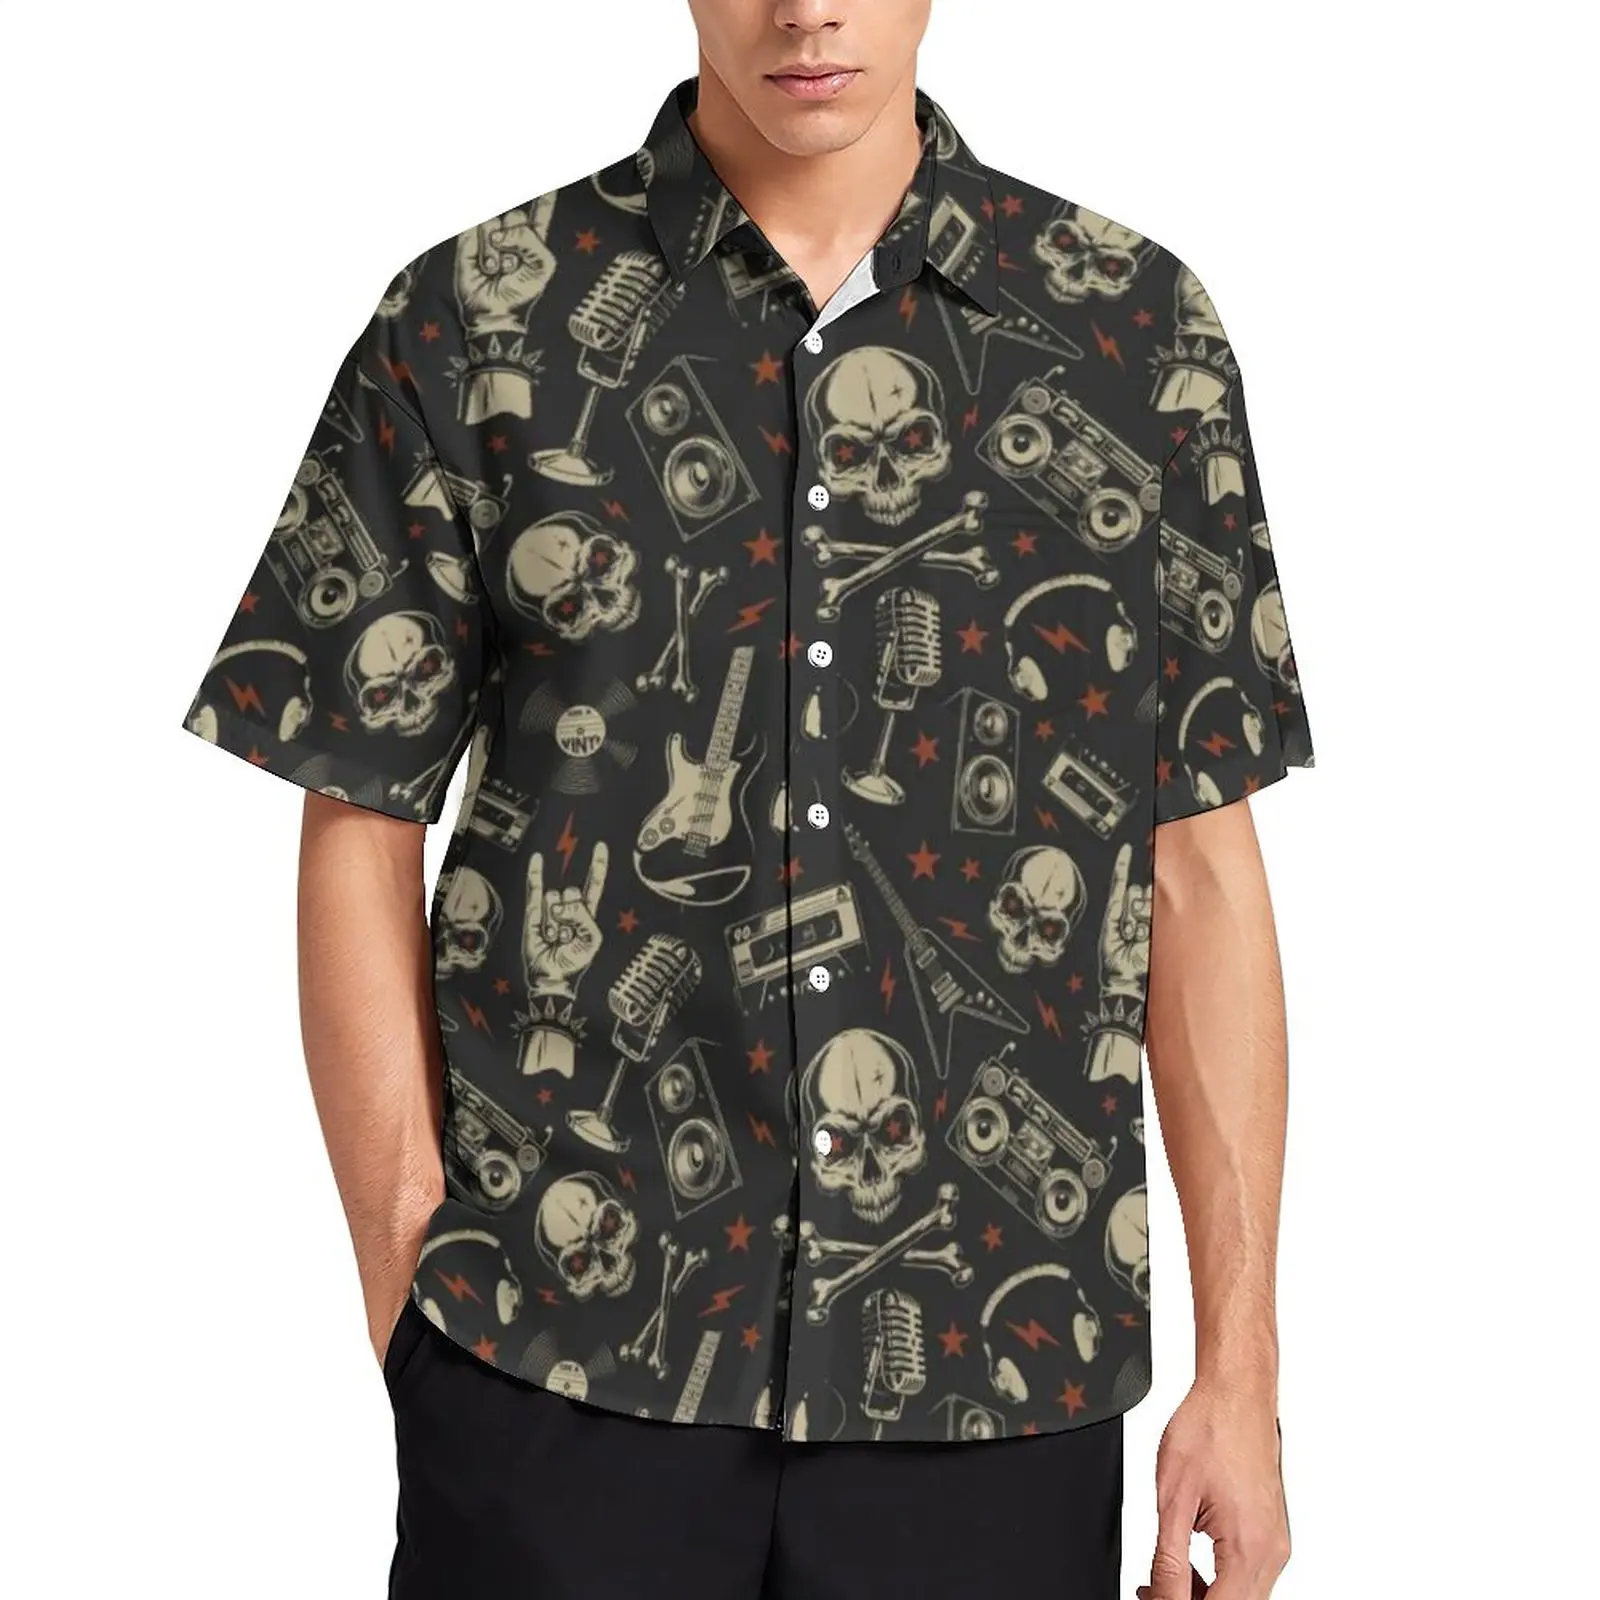 

Metal Music Skull Vacation Shirt Men Rock Grunge Punk Casual Shirts Hawaiian Short-Sleeved Pattern Trending Oversized Blouses